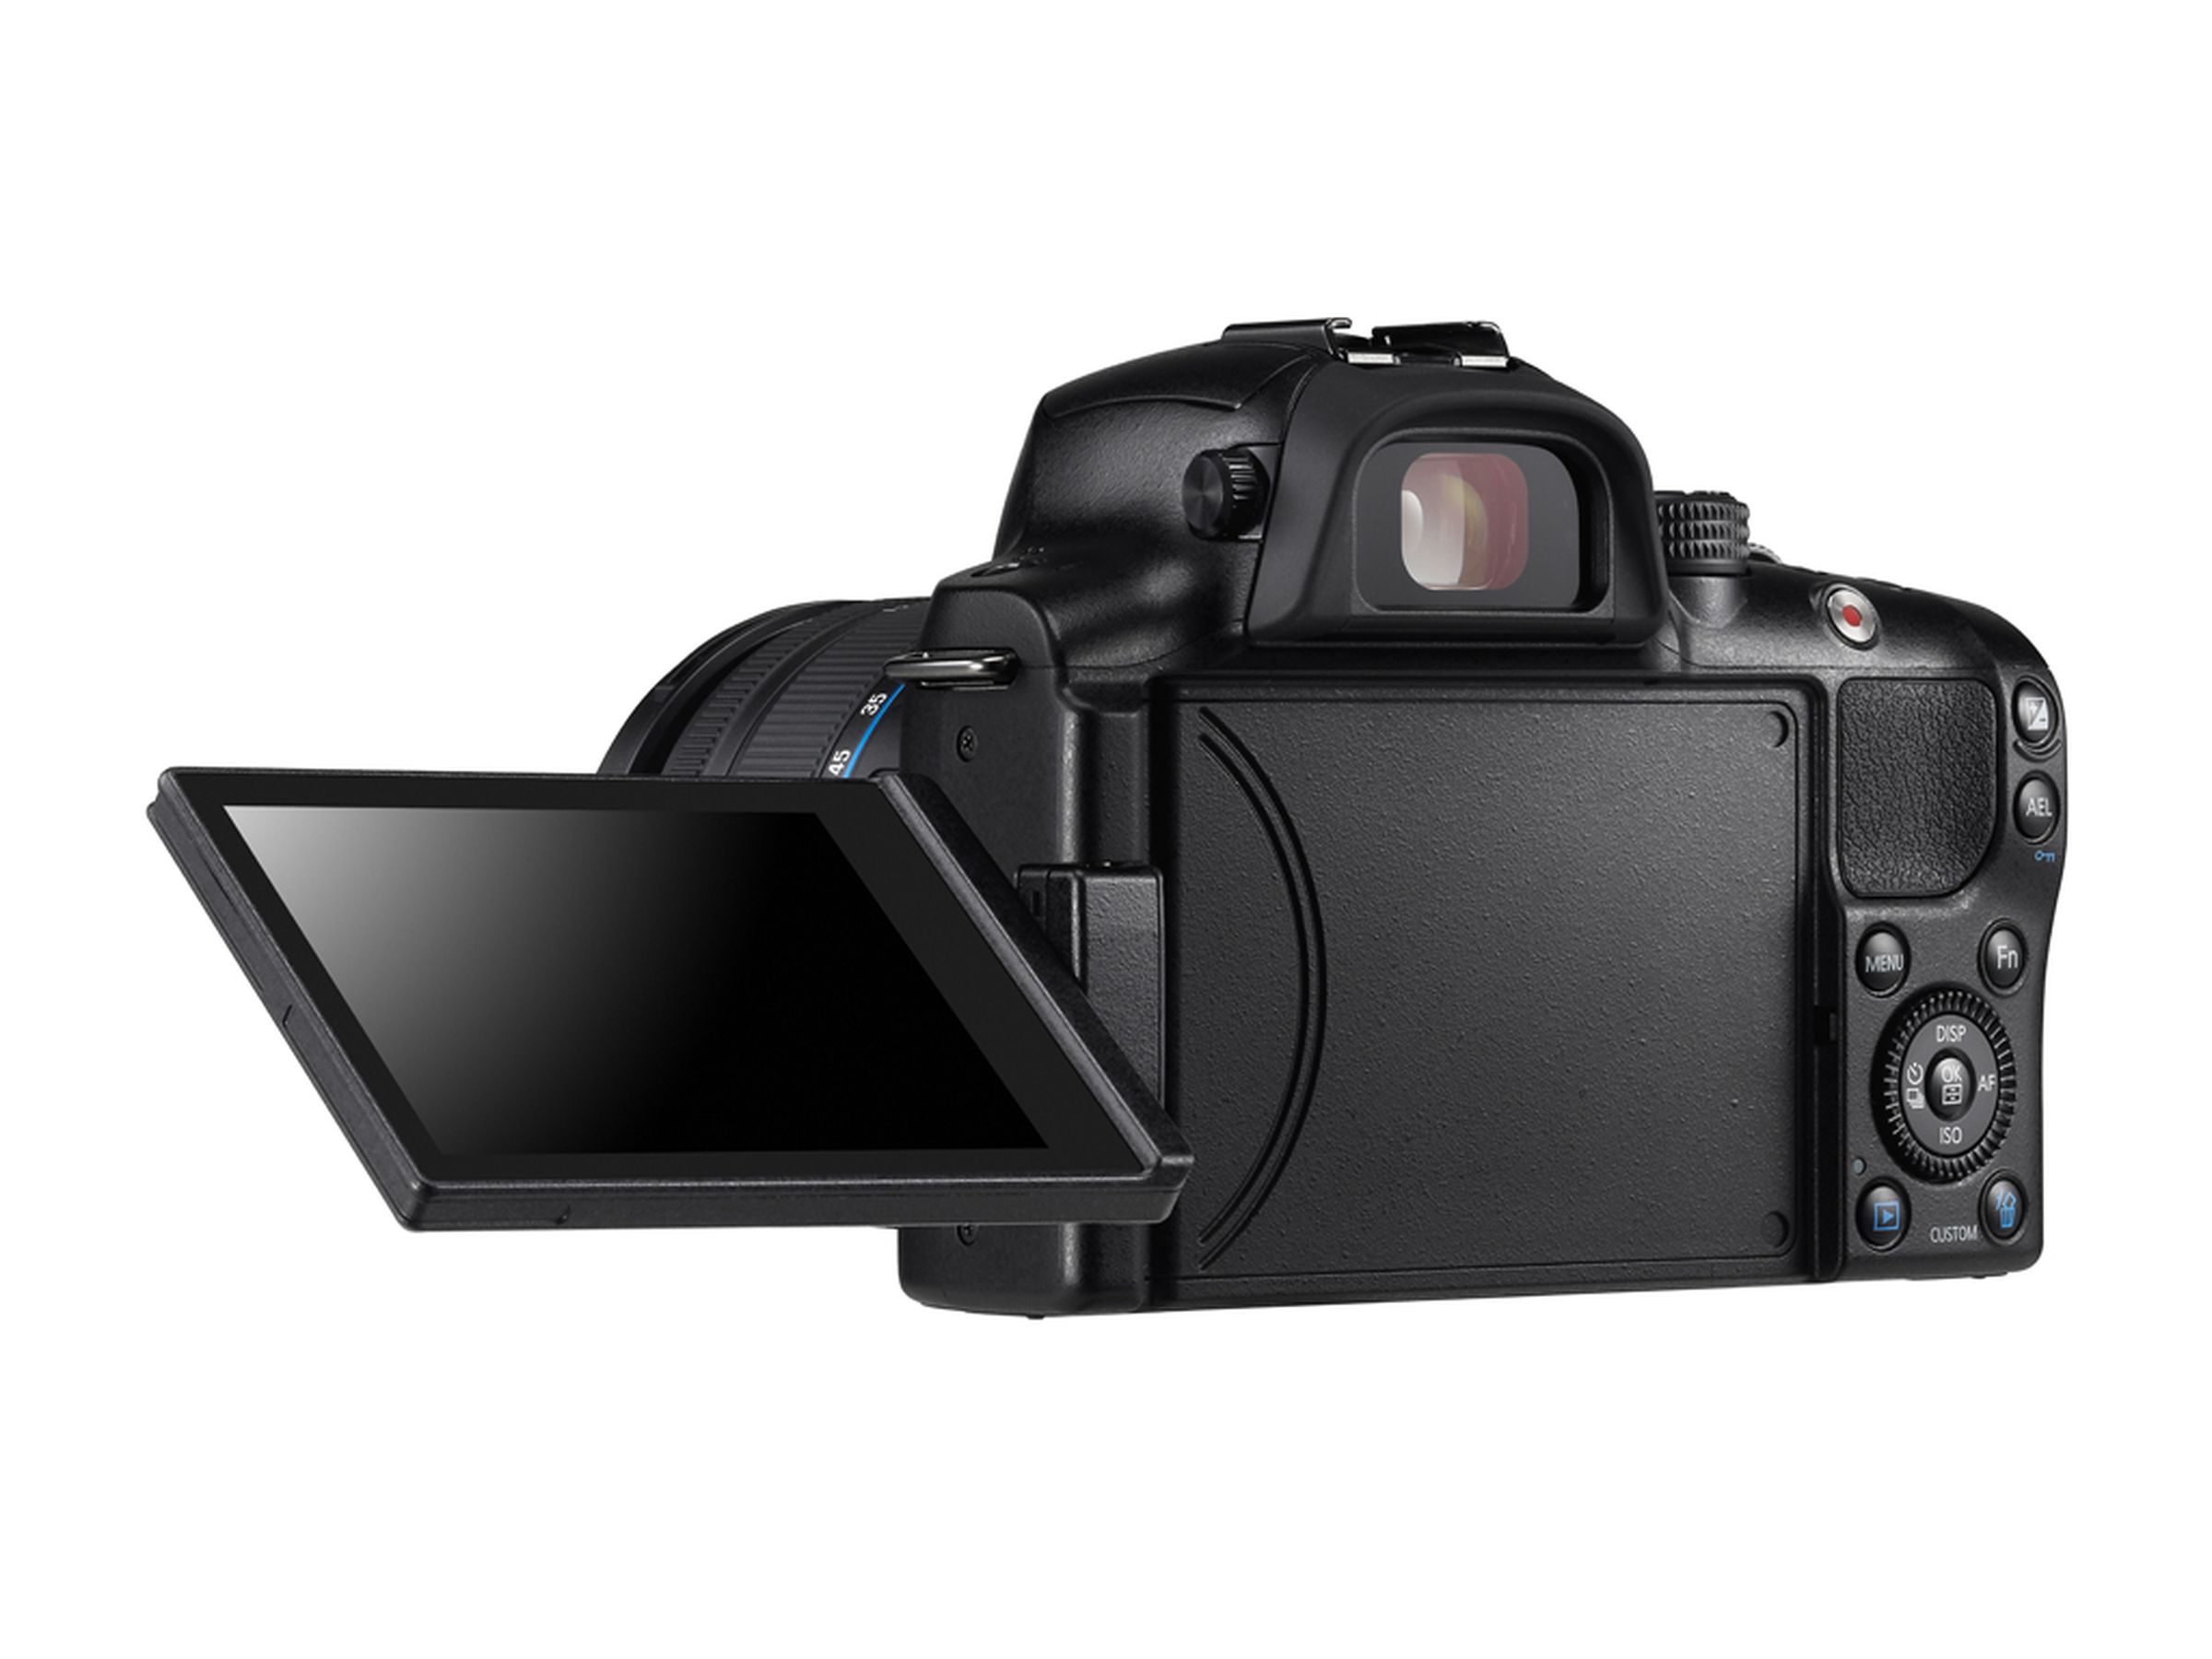 Samsung's 2012 NX mirrorless camera lineup